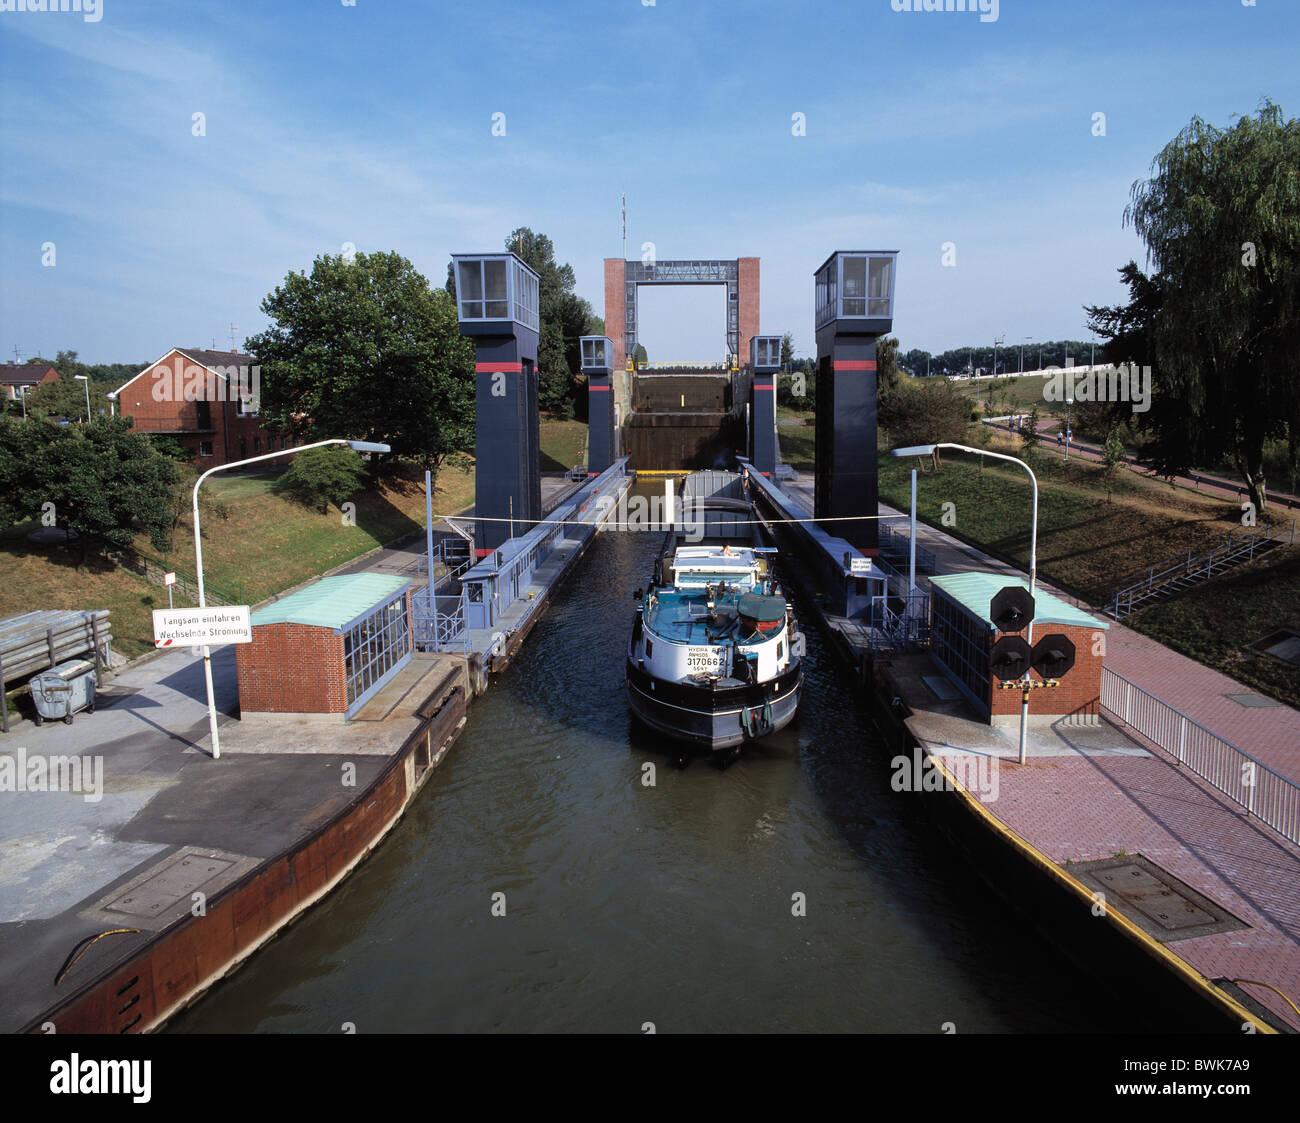 Nave cargo nave castello paranco Henrichen sluice Binnenkanal canal industria Waltrop Ruhr Germania Europ Foto Stock